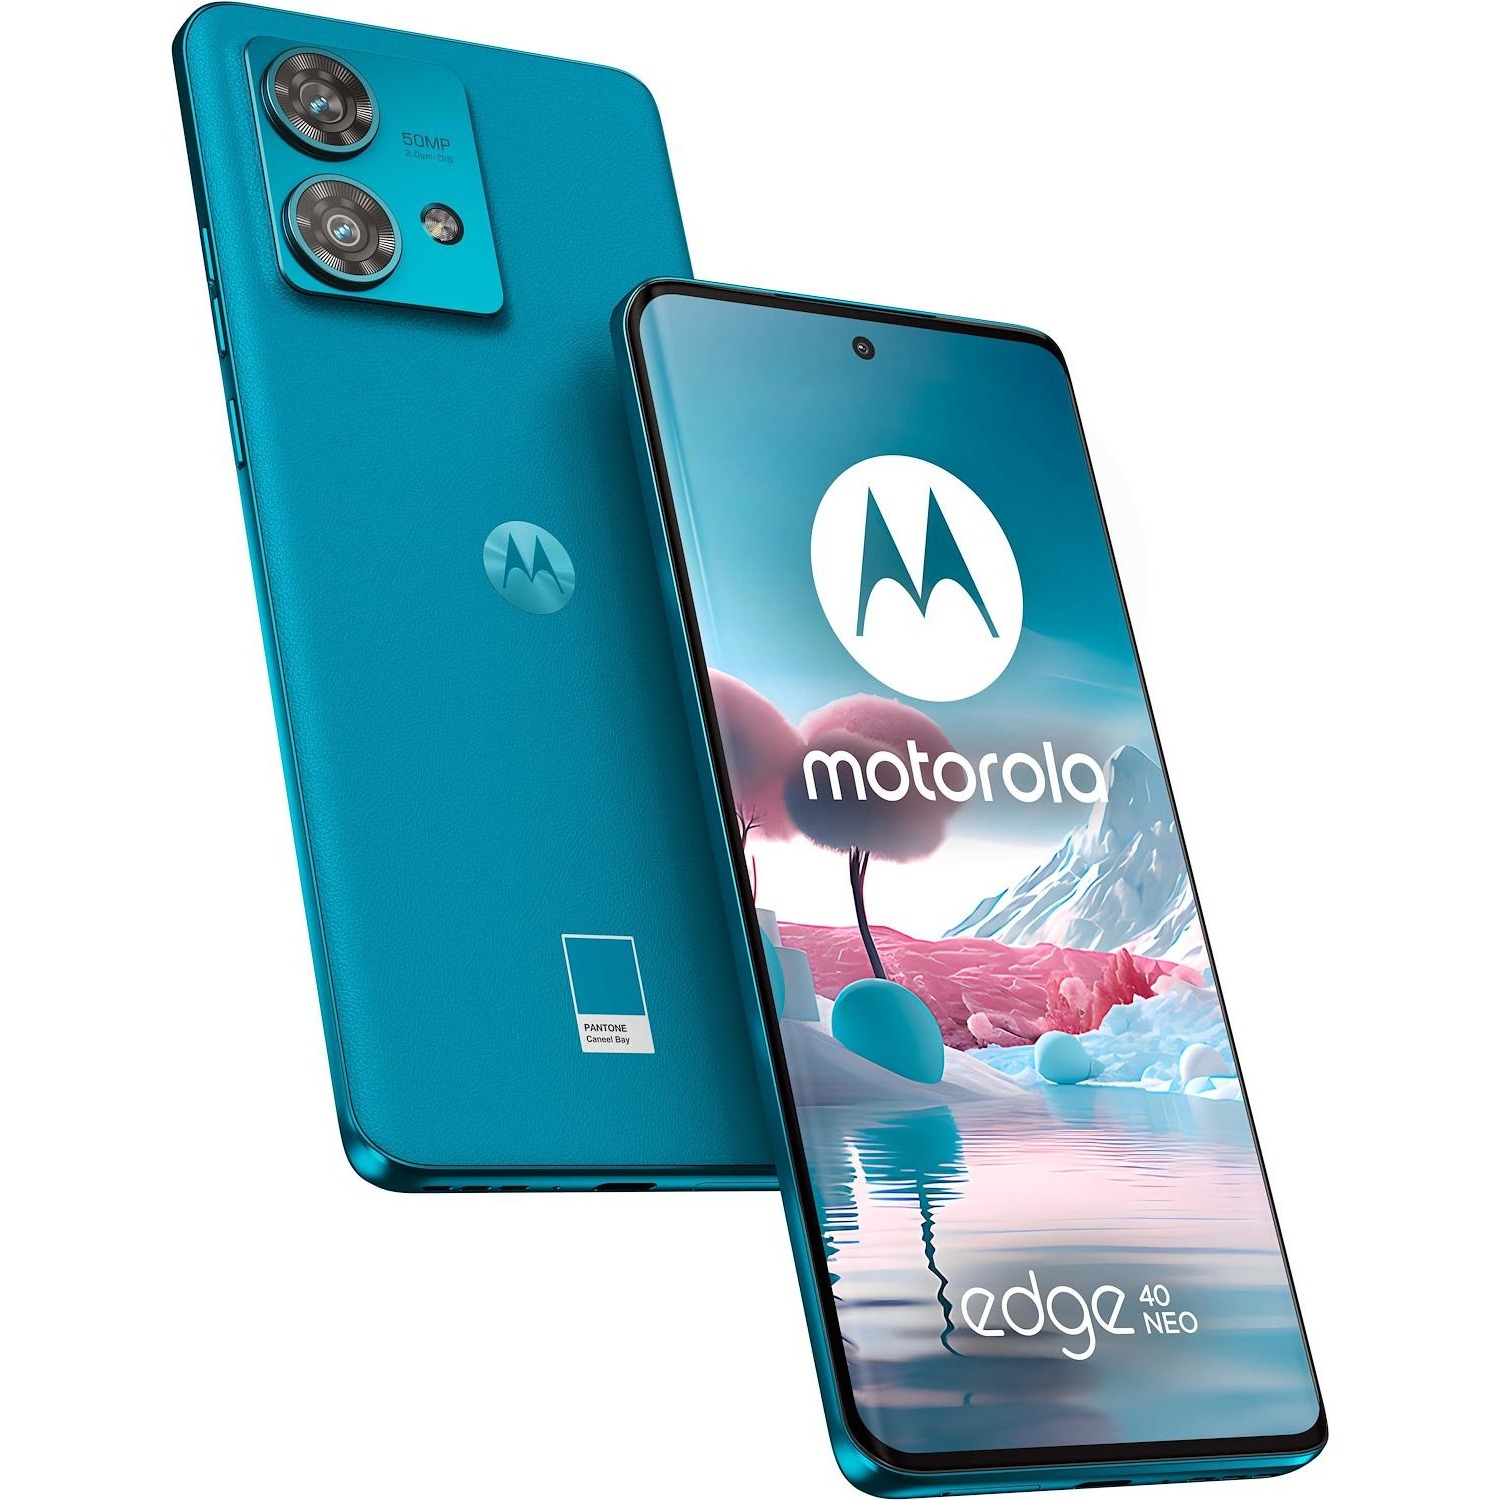 Immagine per Smartphone Motorola Edge 40 Neo caneel bay light blue da DIMOStore